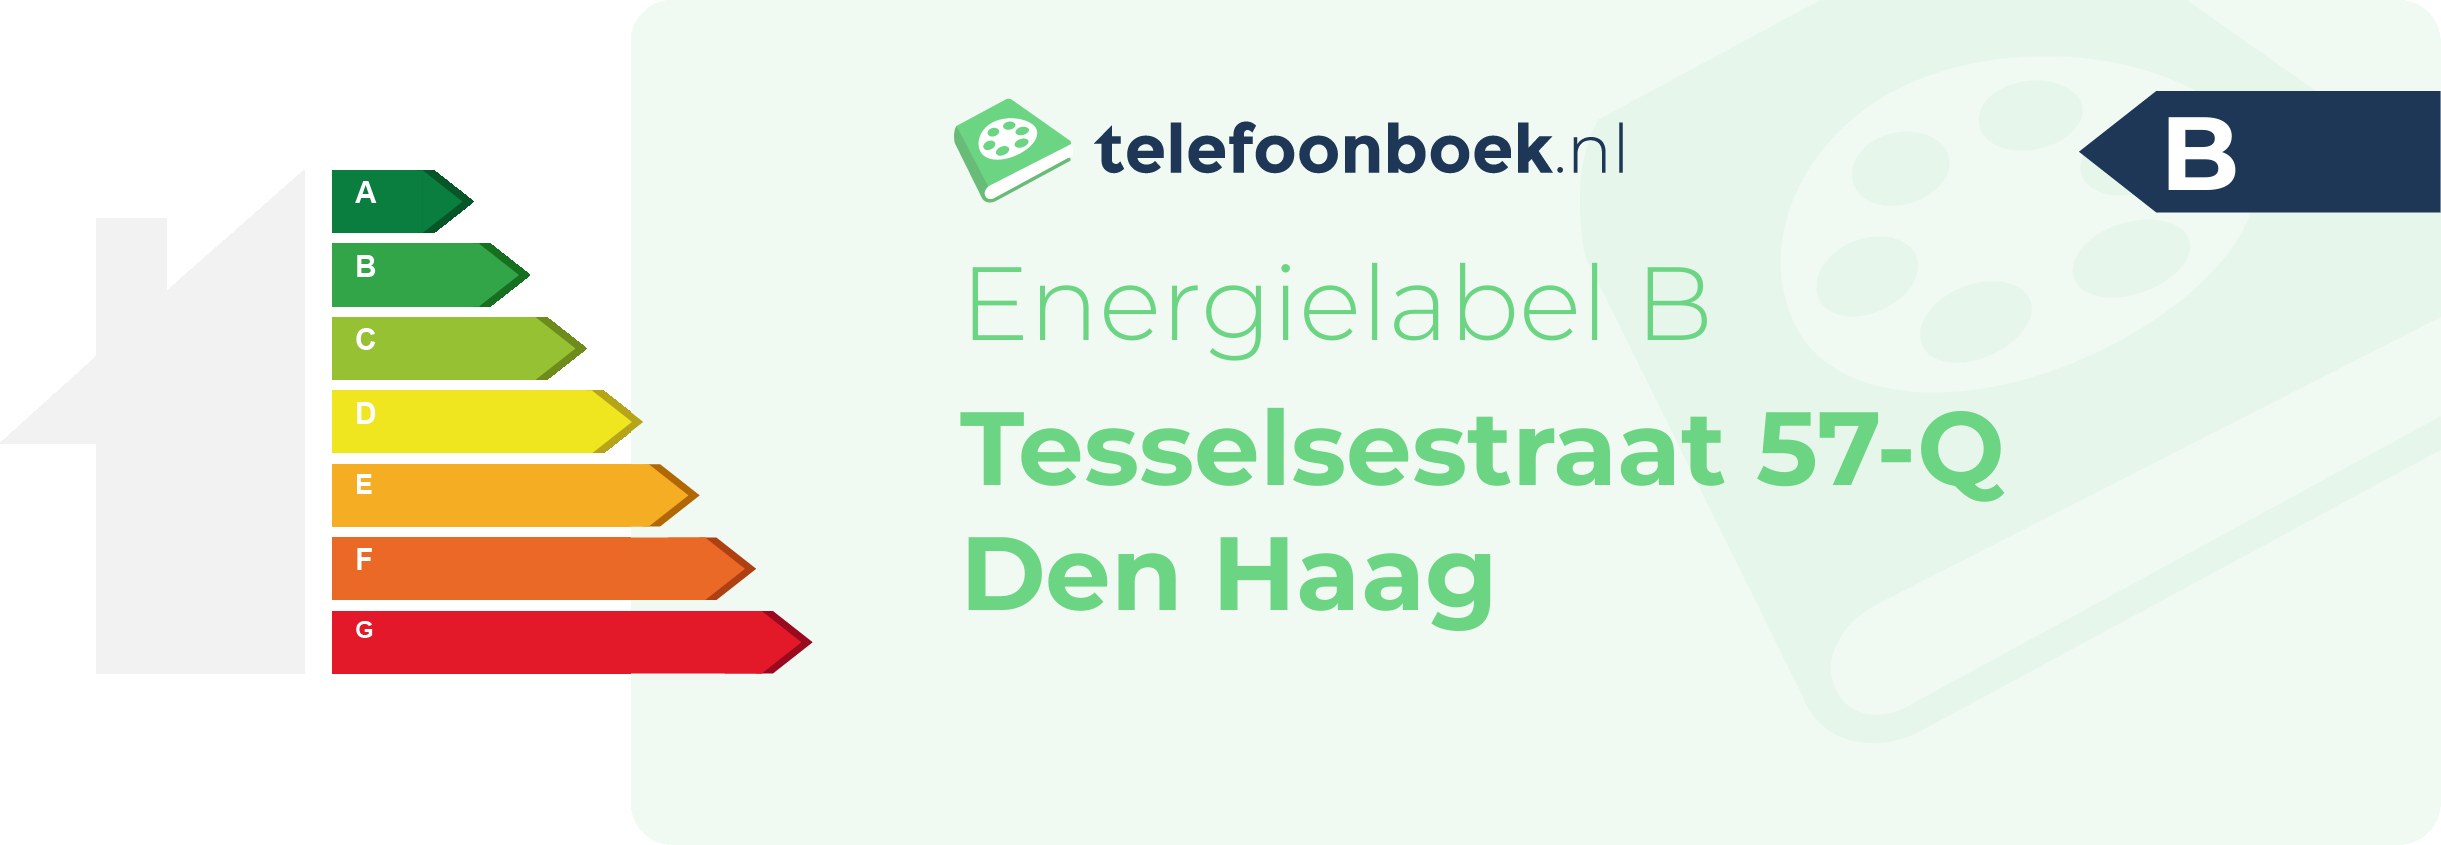 Energielabel Tesselsestraat 57-Q Den Haag